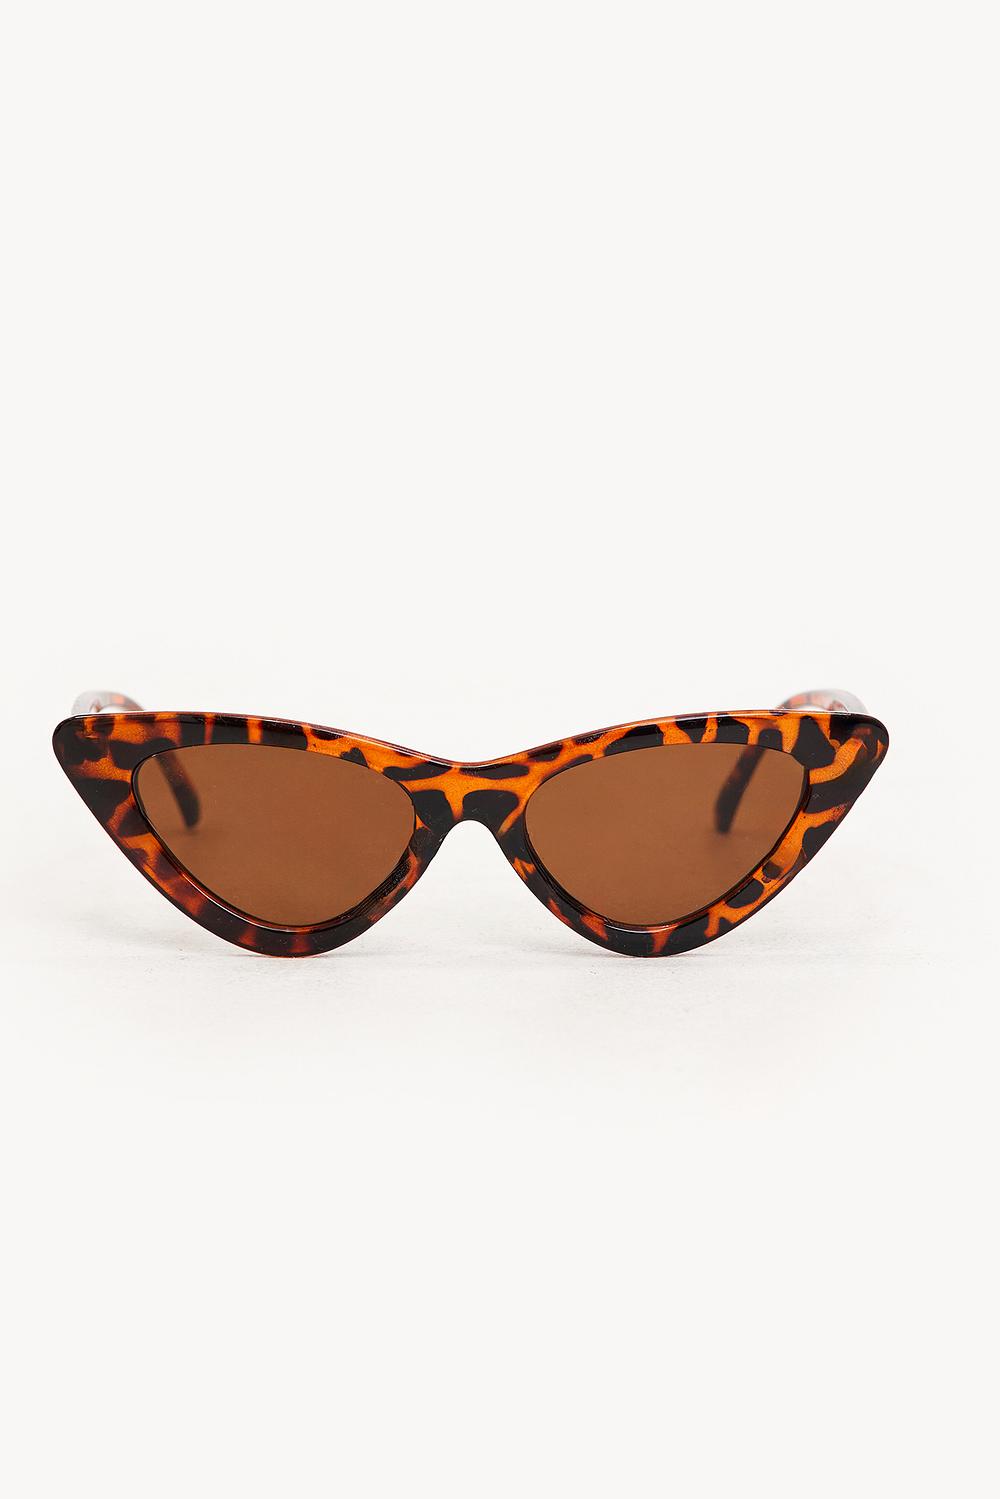 Brown cat-eye sunglasses